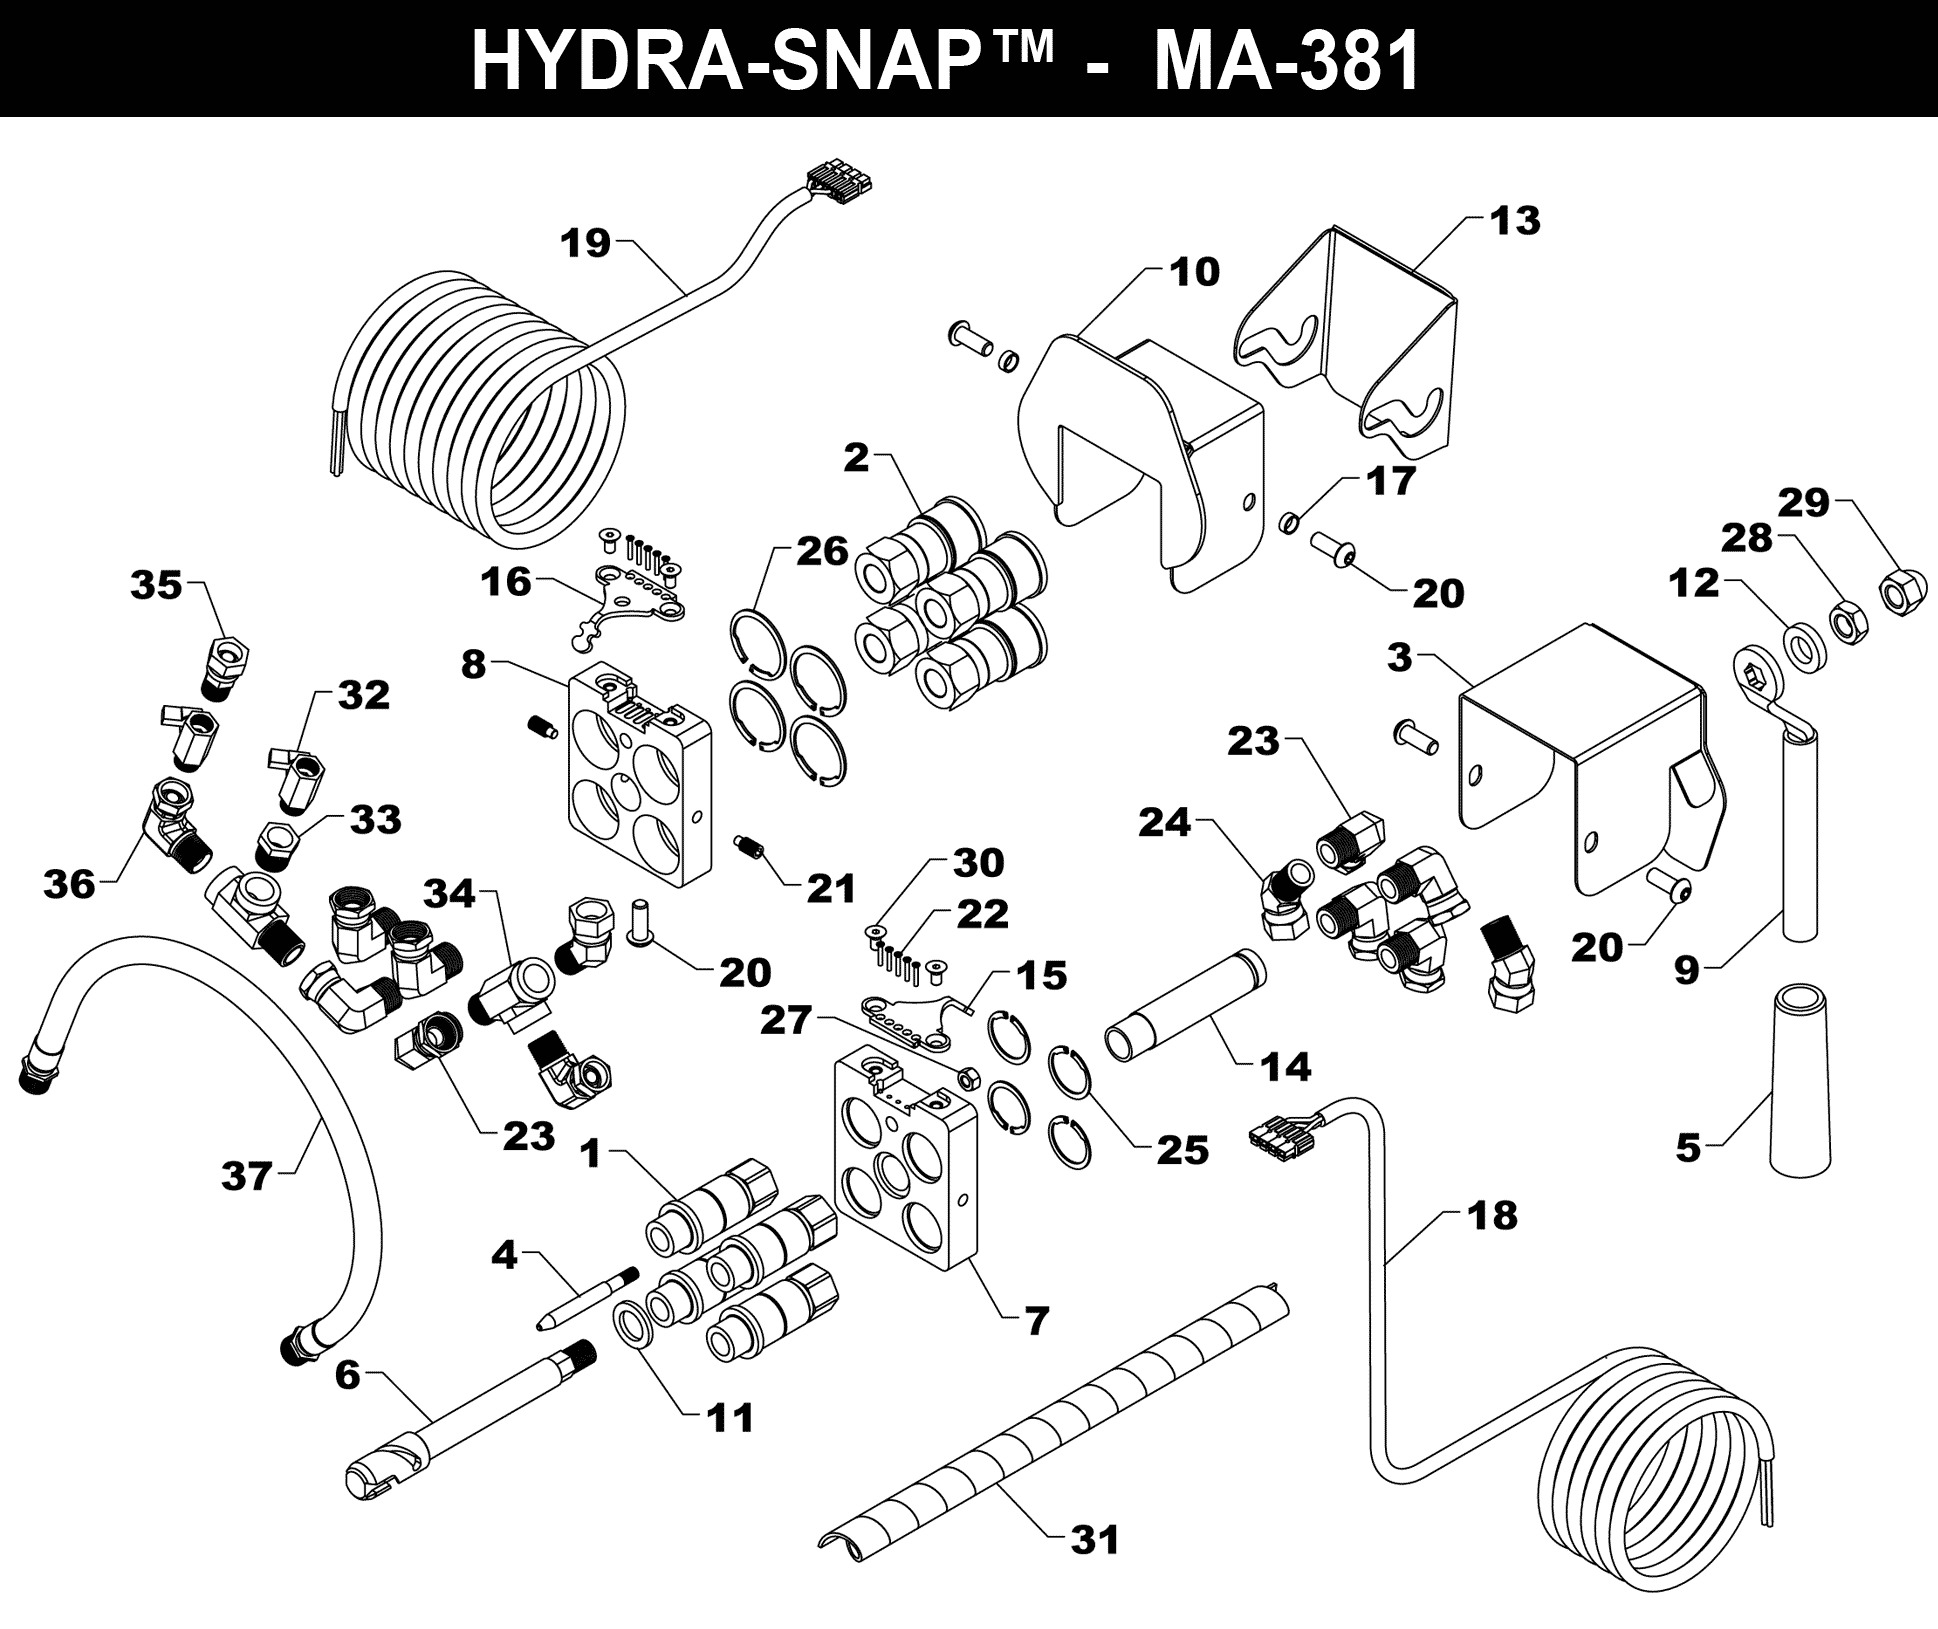 Hydra-Snap™ - MA-381